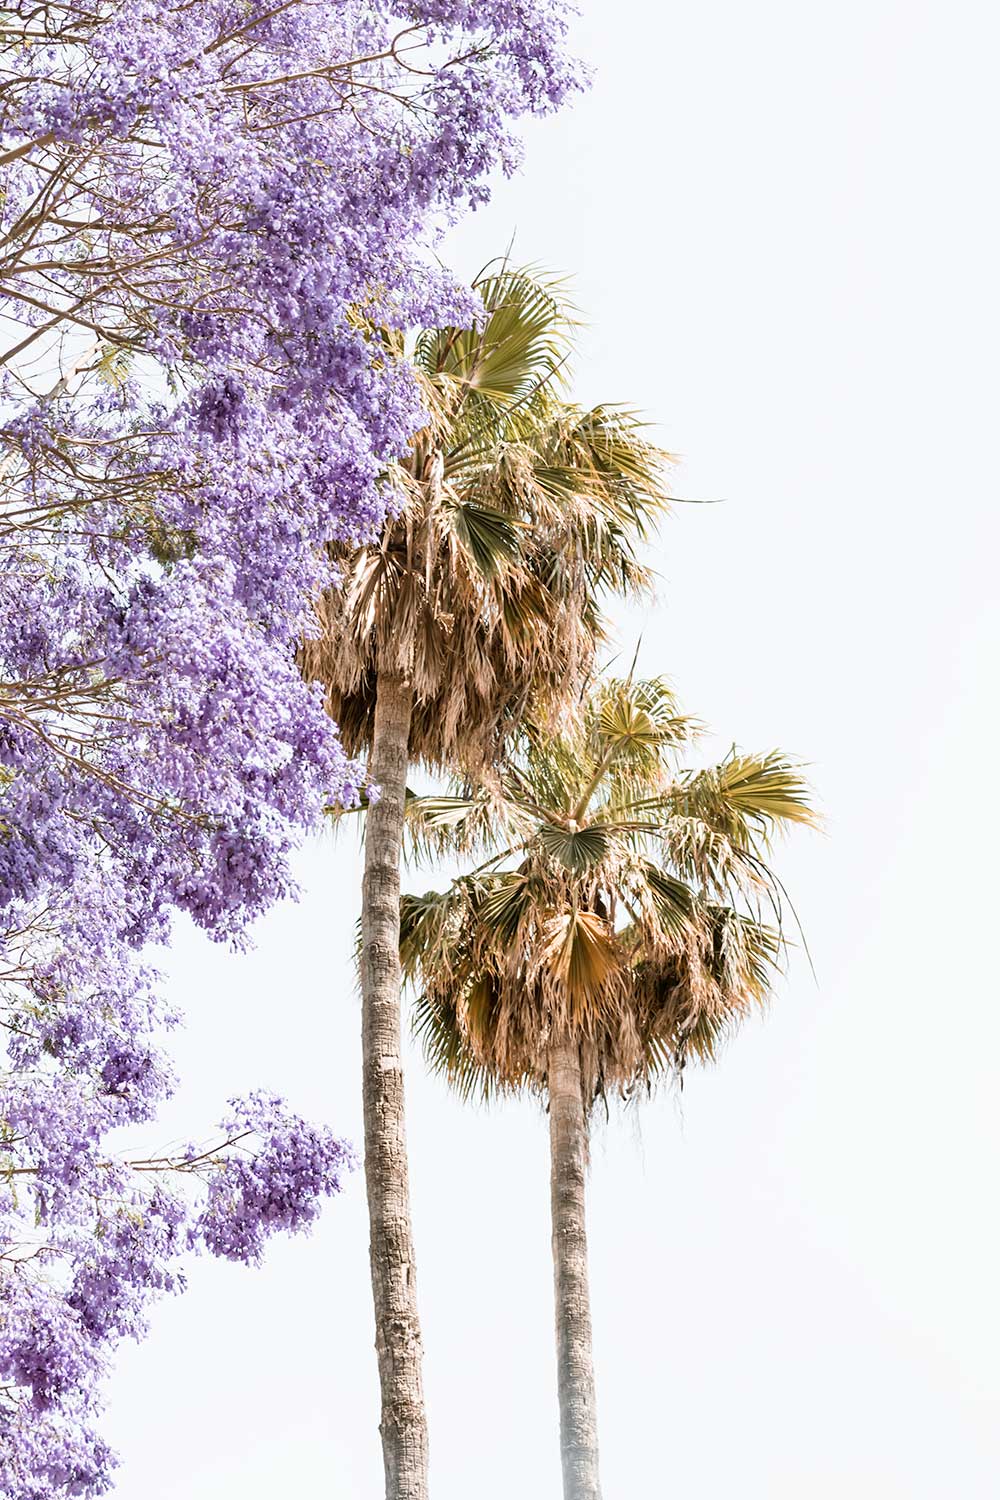 Palm trees in Jerusalem